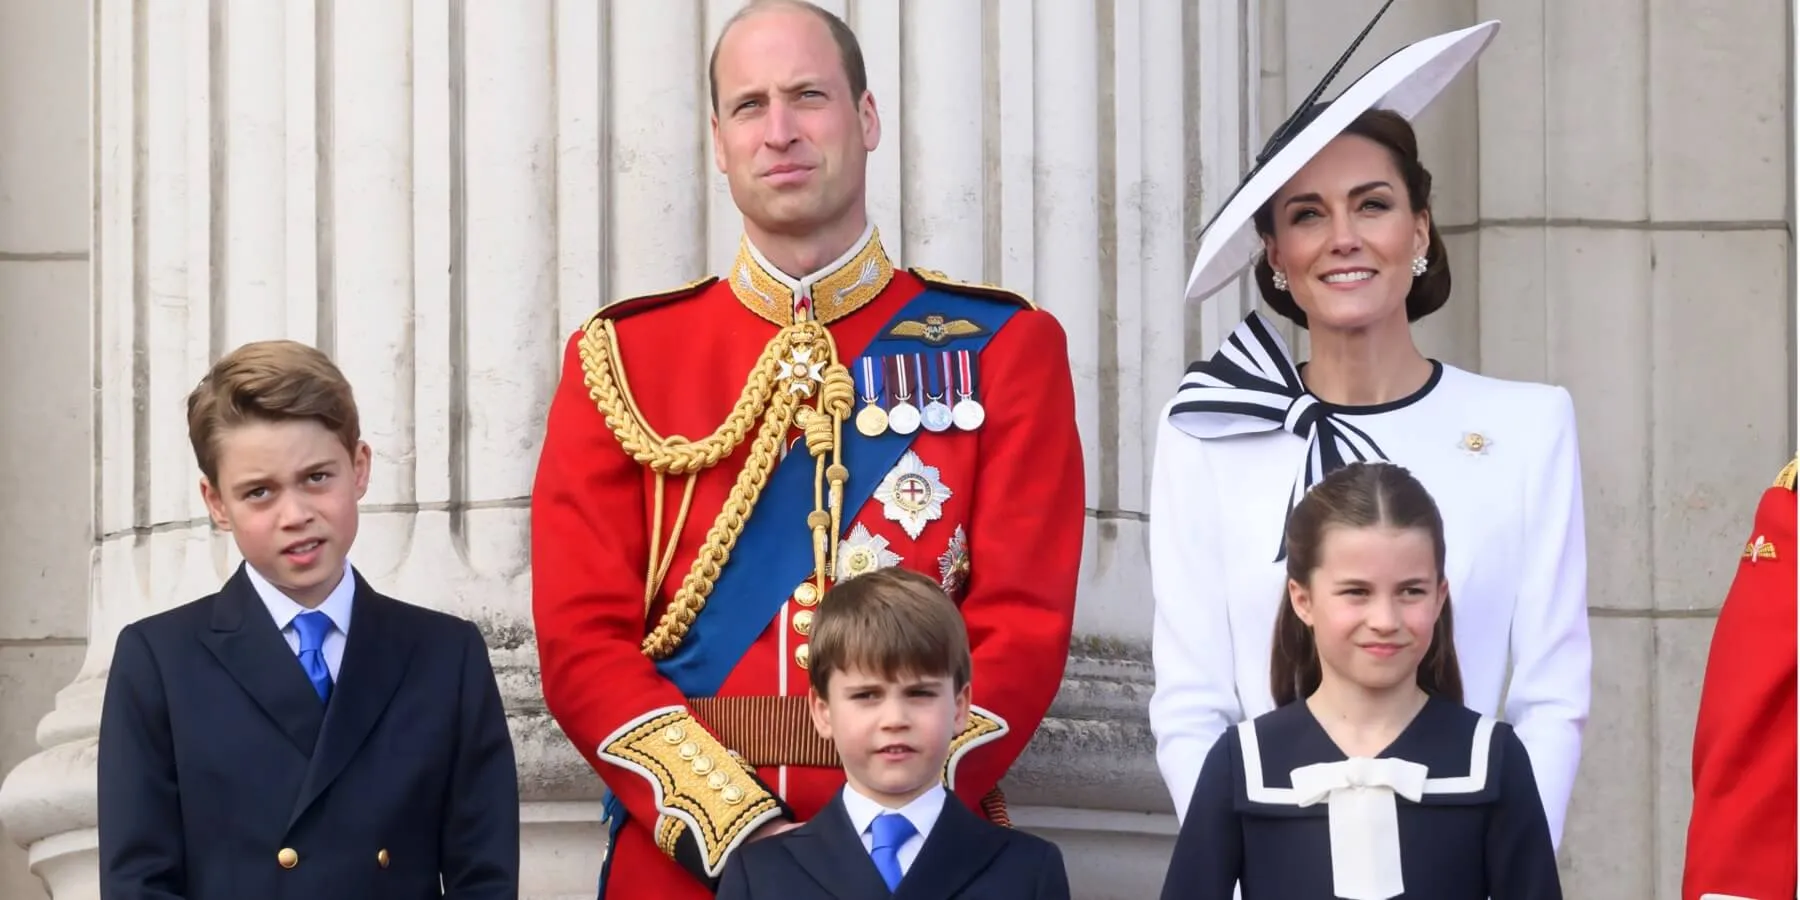 Prince William, Kate Middleton, Prince George, Prince Louis and Princess Charlotte on the Buckingham Palace balcony